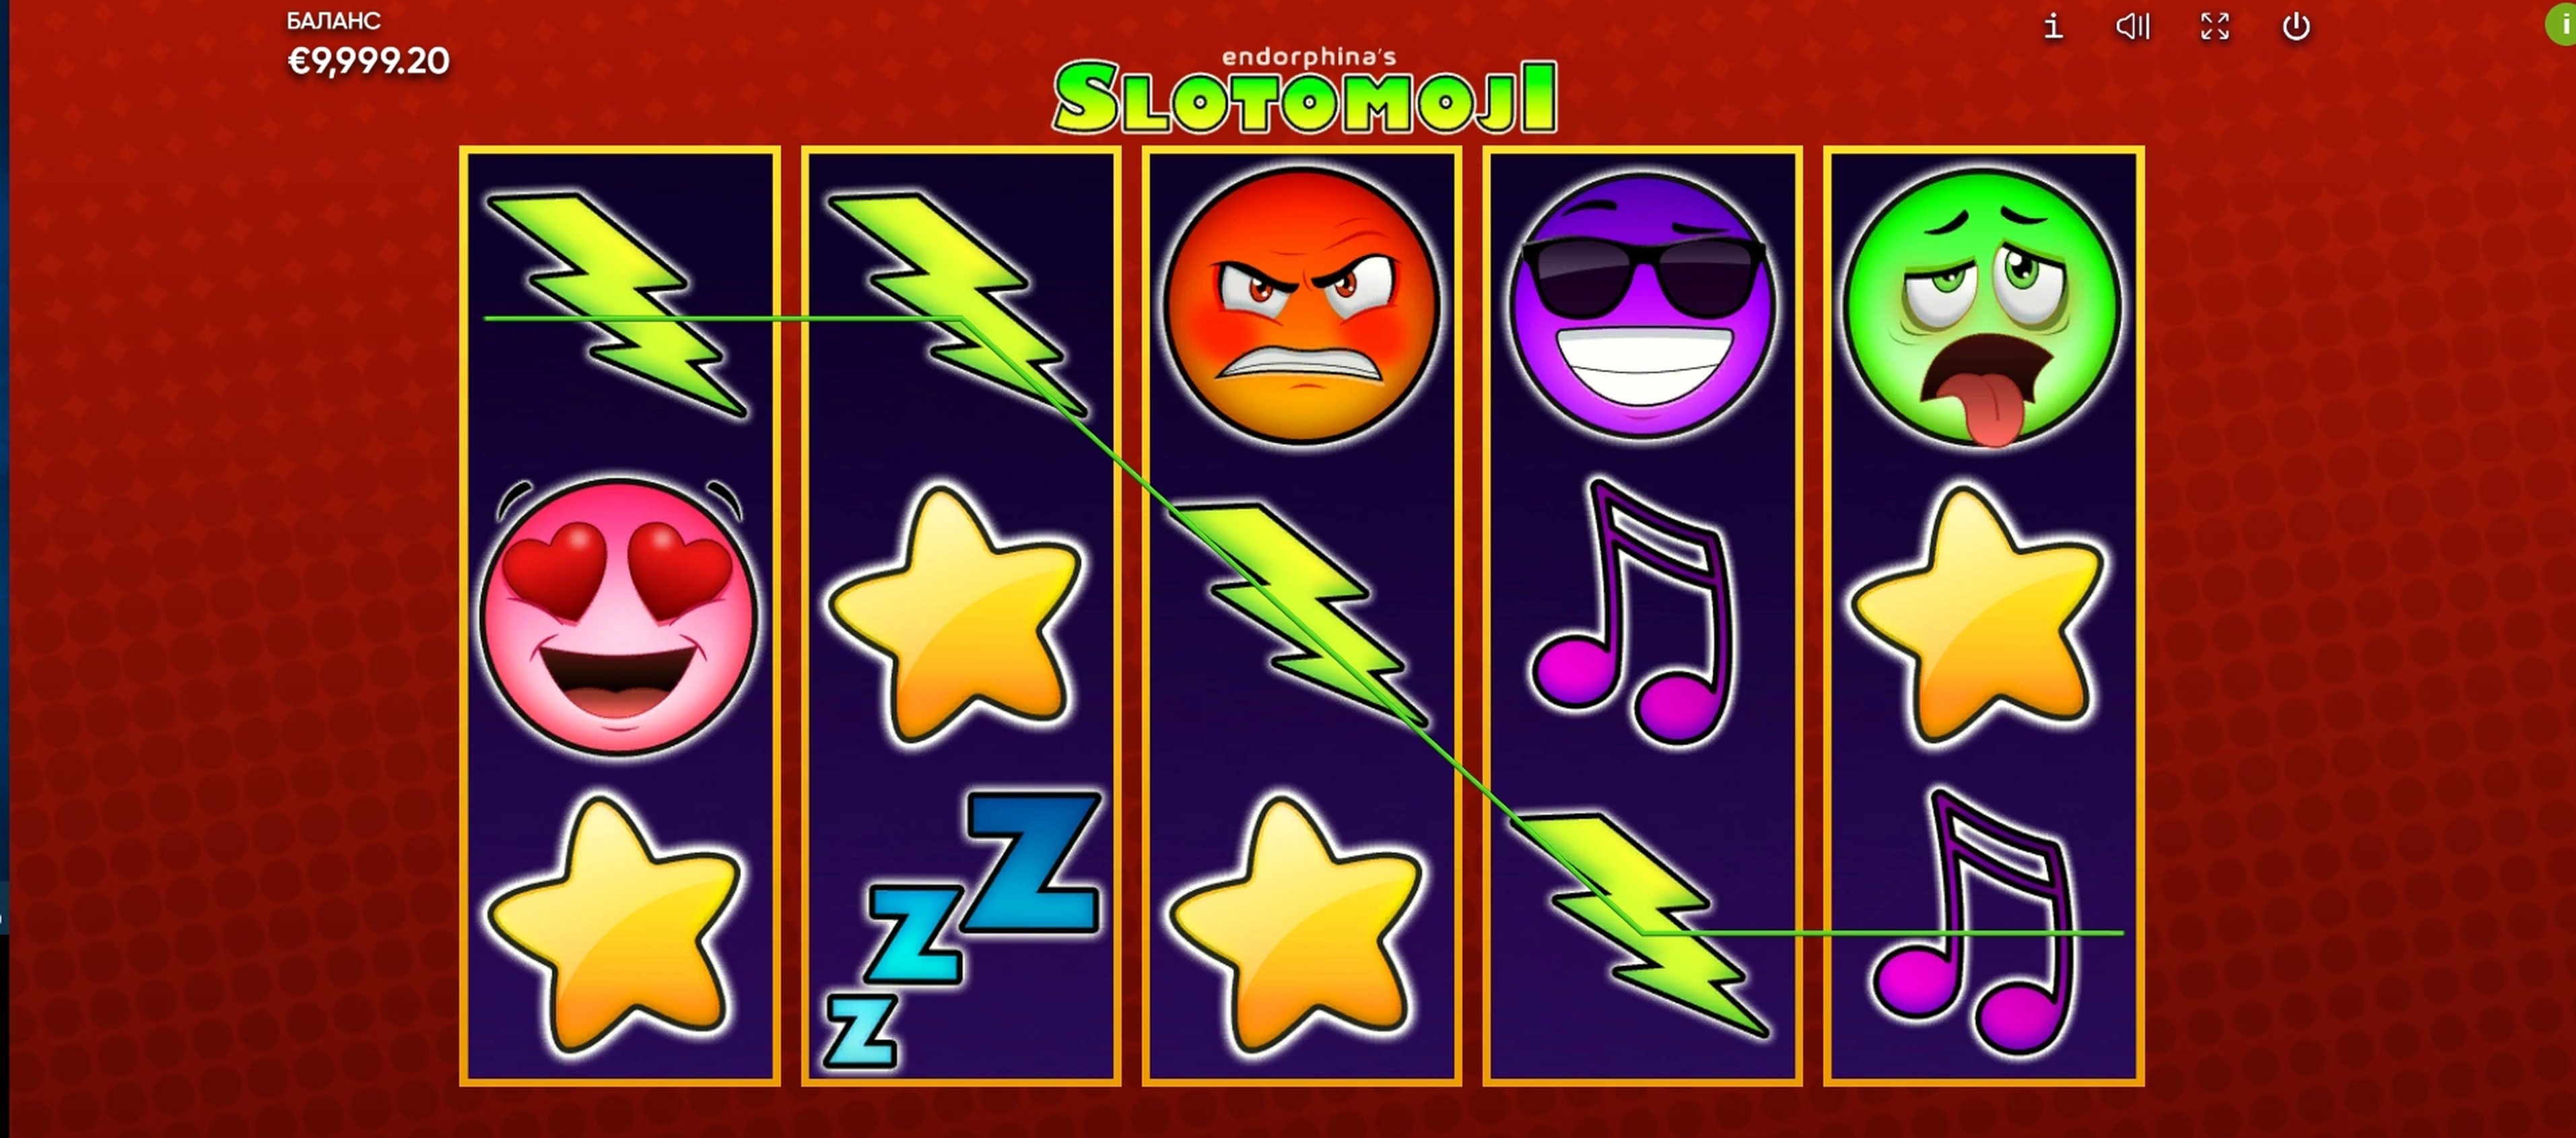 Win Money in Slotomoji Free Slot Game by Endorphina